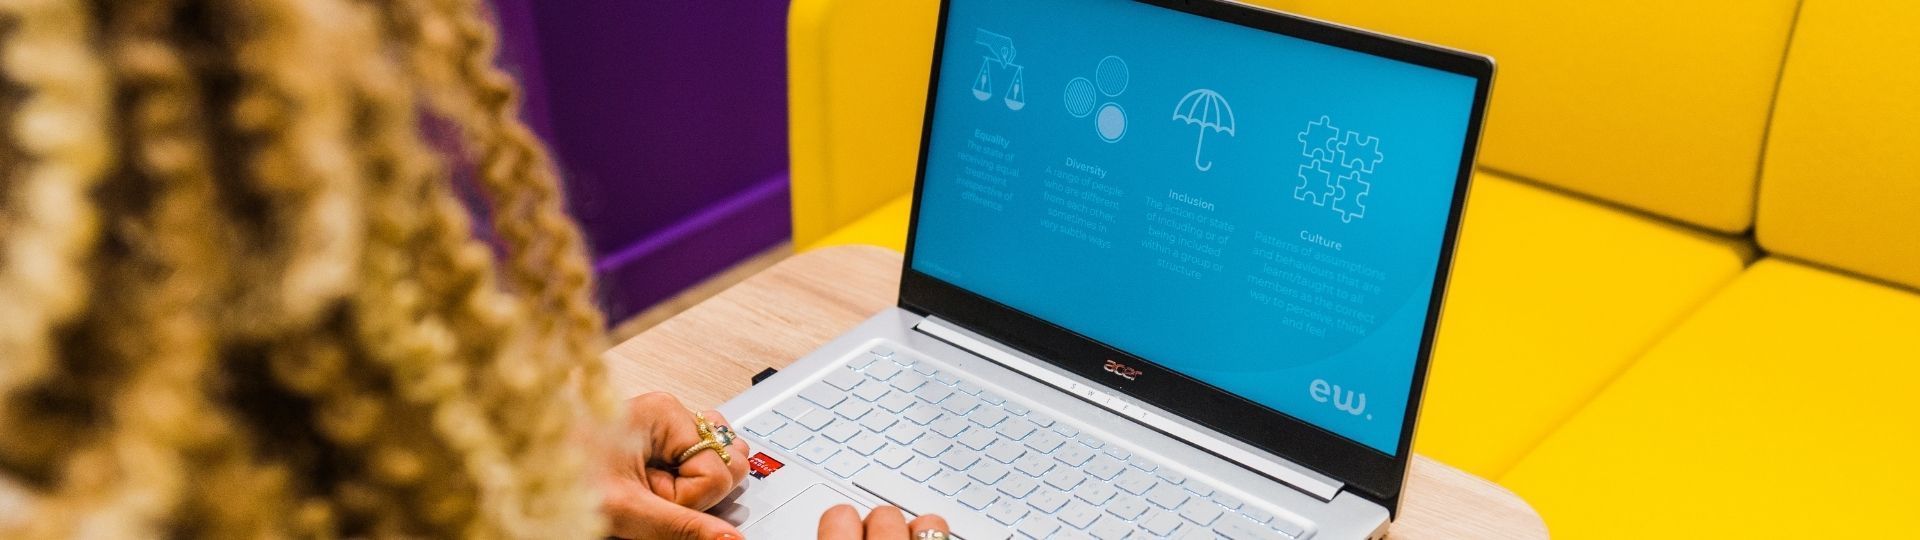 Diversity e-learning laptop